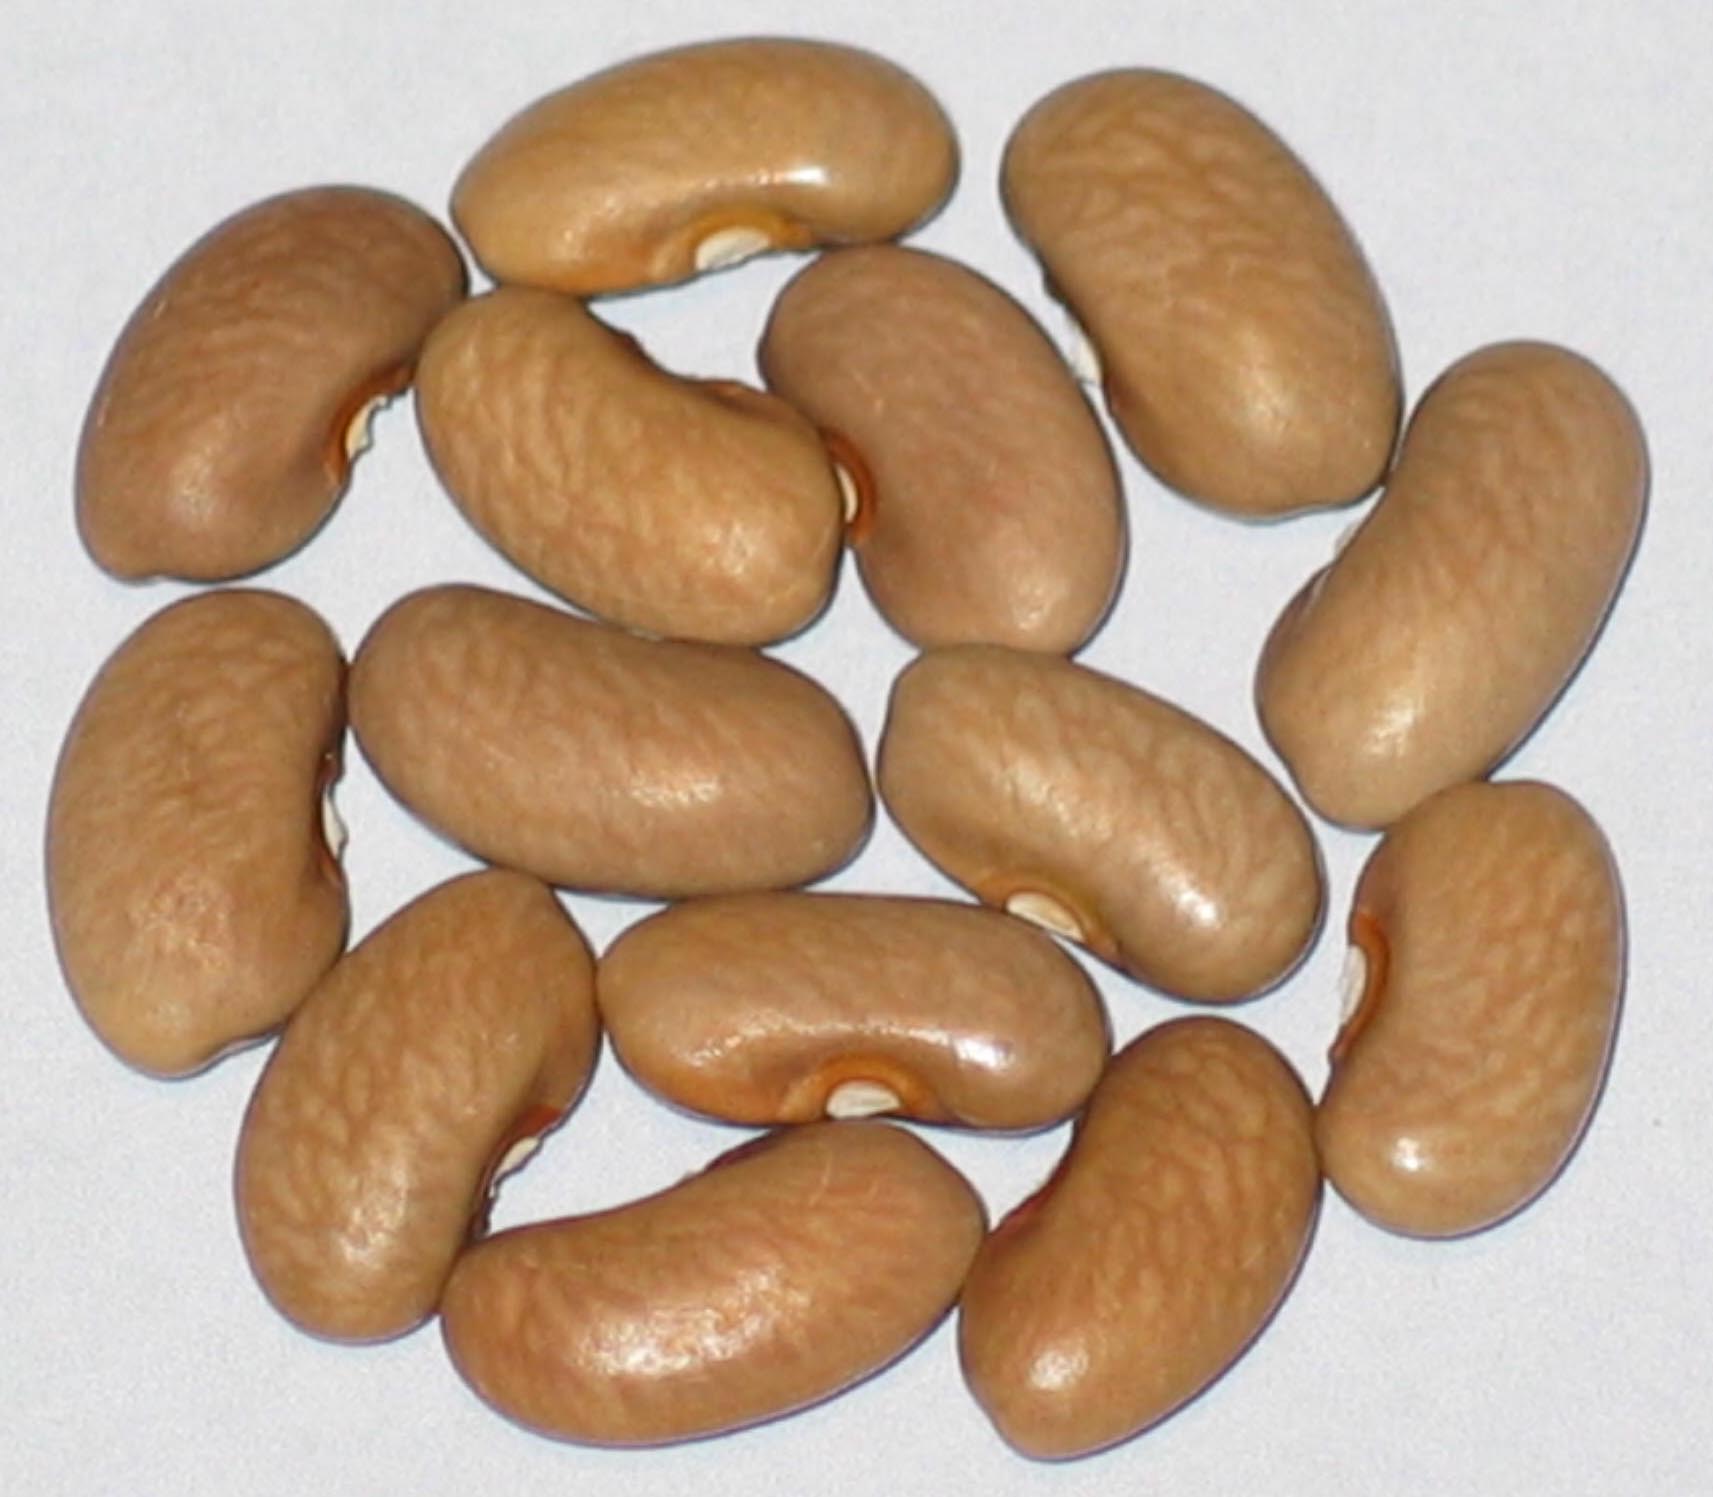 image of Harvard beans